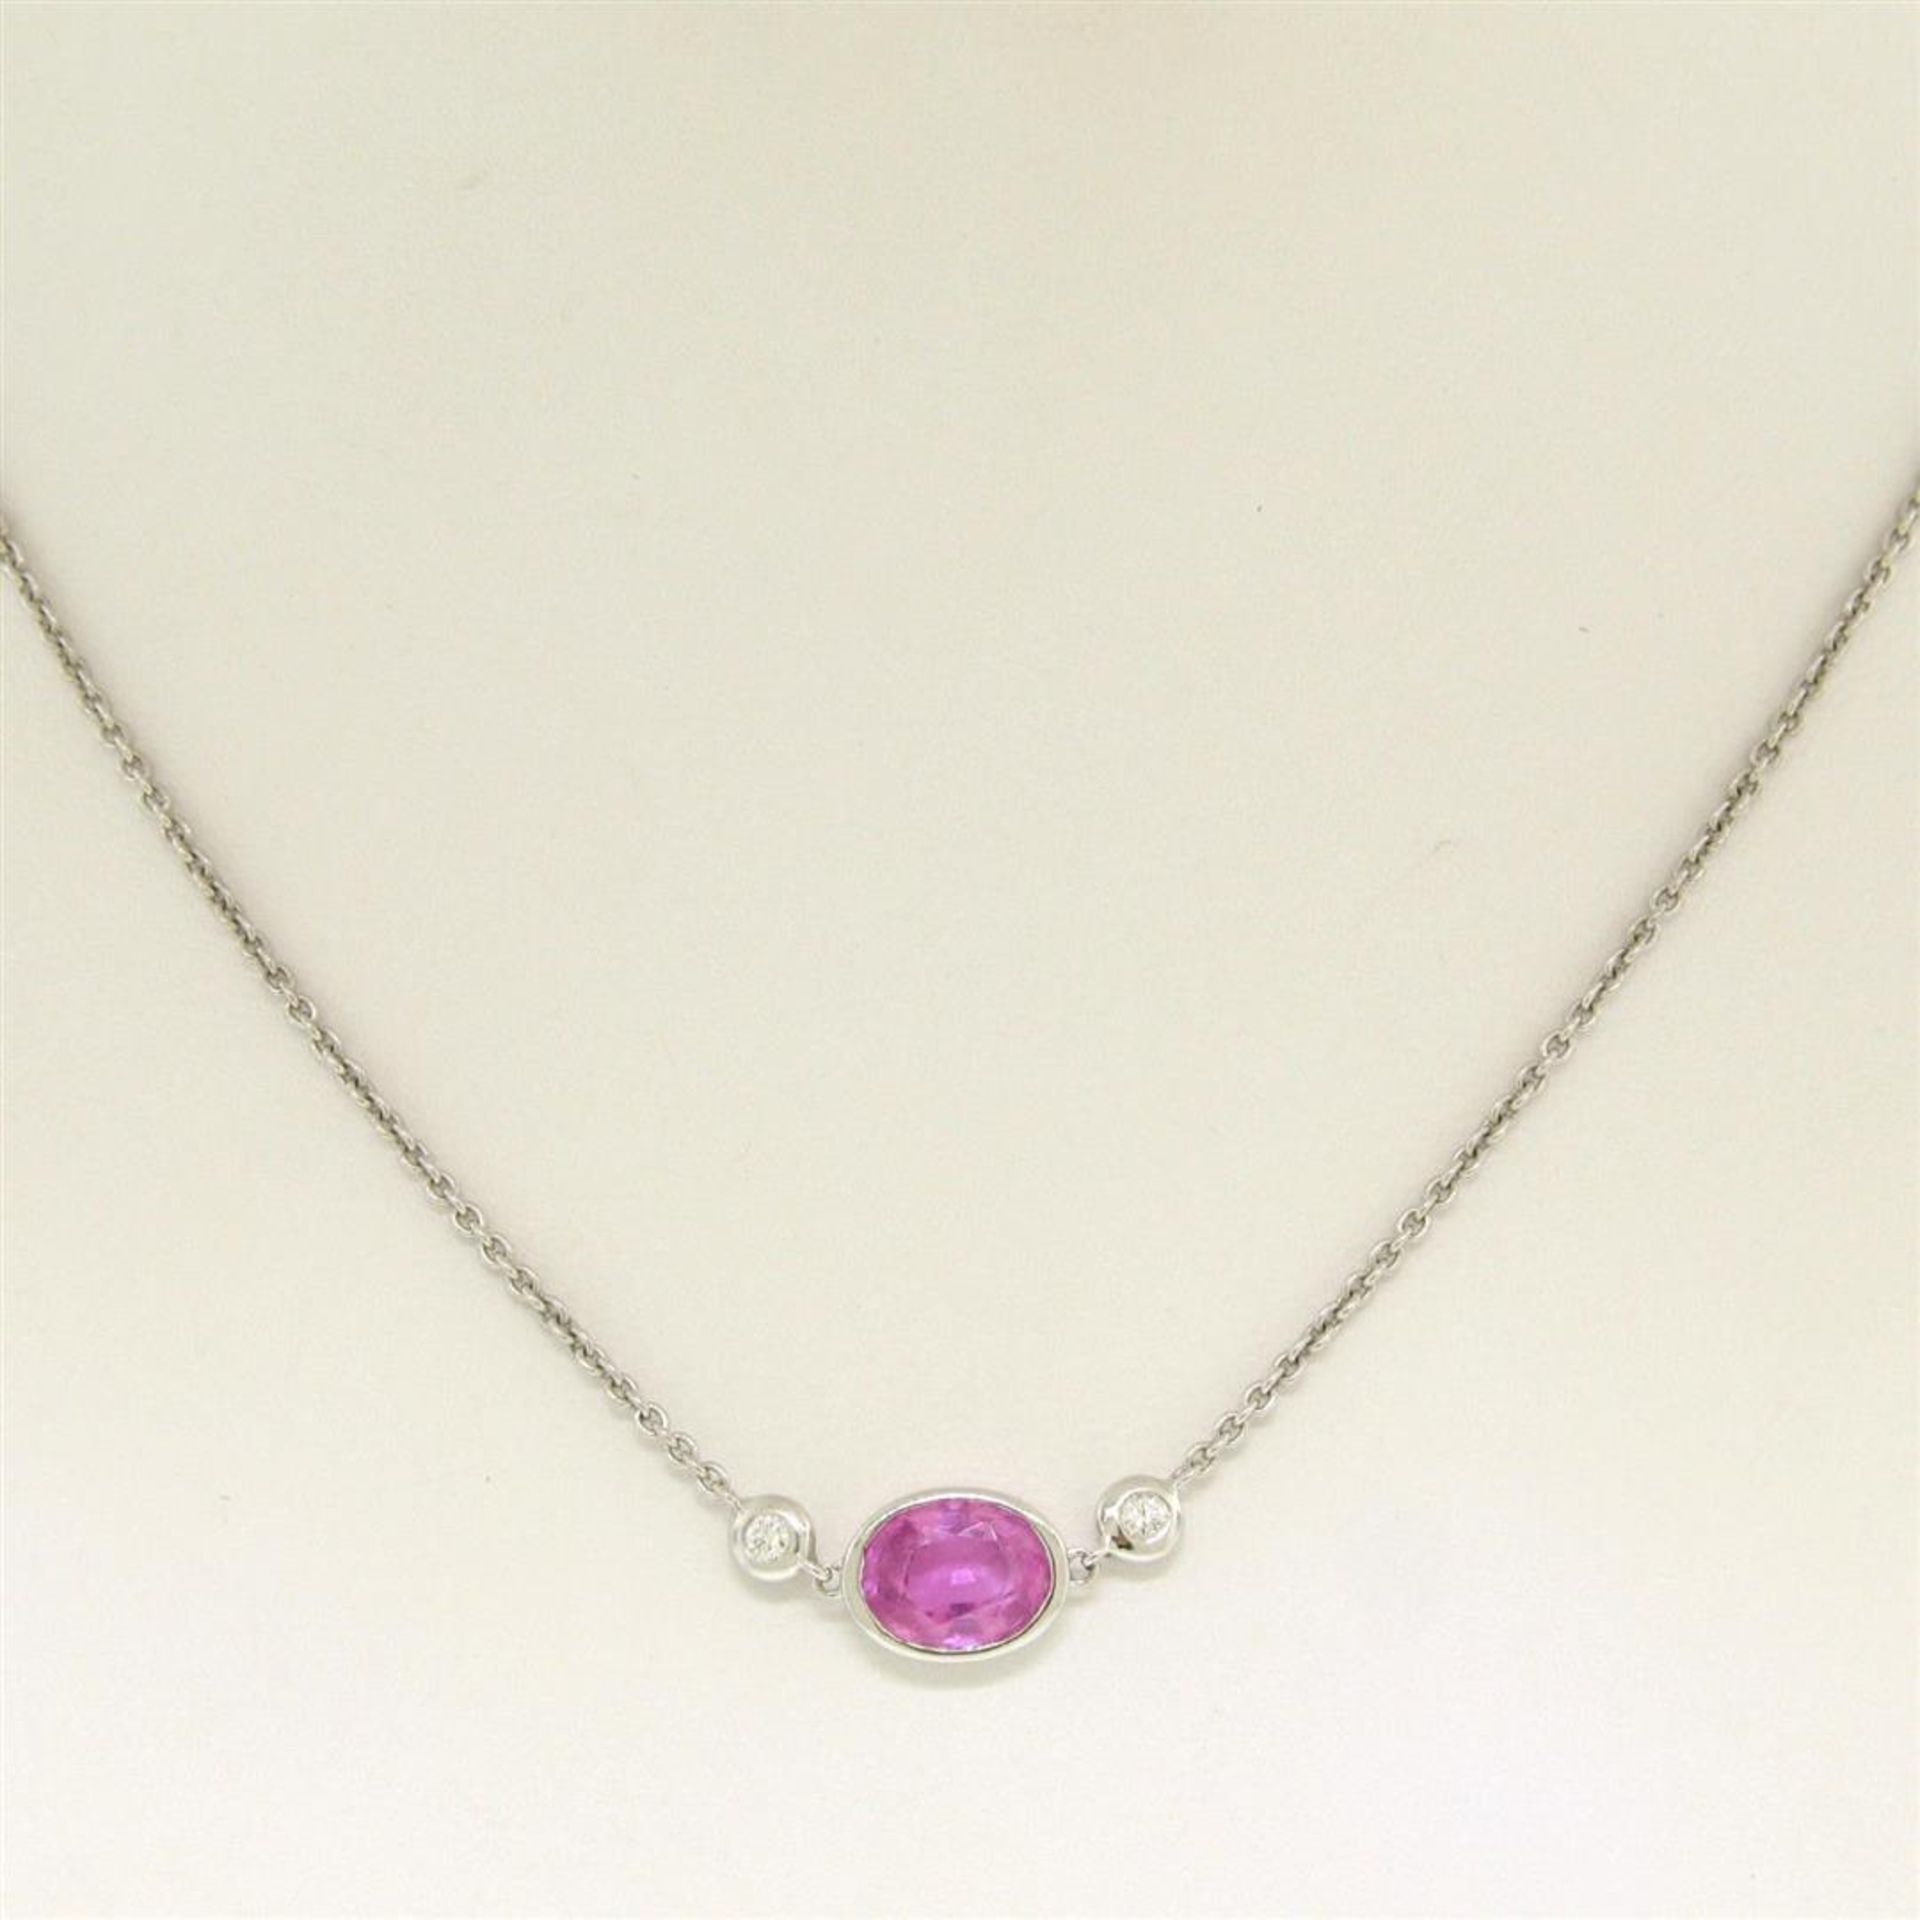 18K White Gold 16" 1.37 ctw GIA Pink Sapphire & Diamond Pendant Necklace - Image 3 of 9